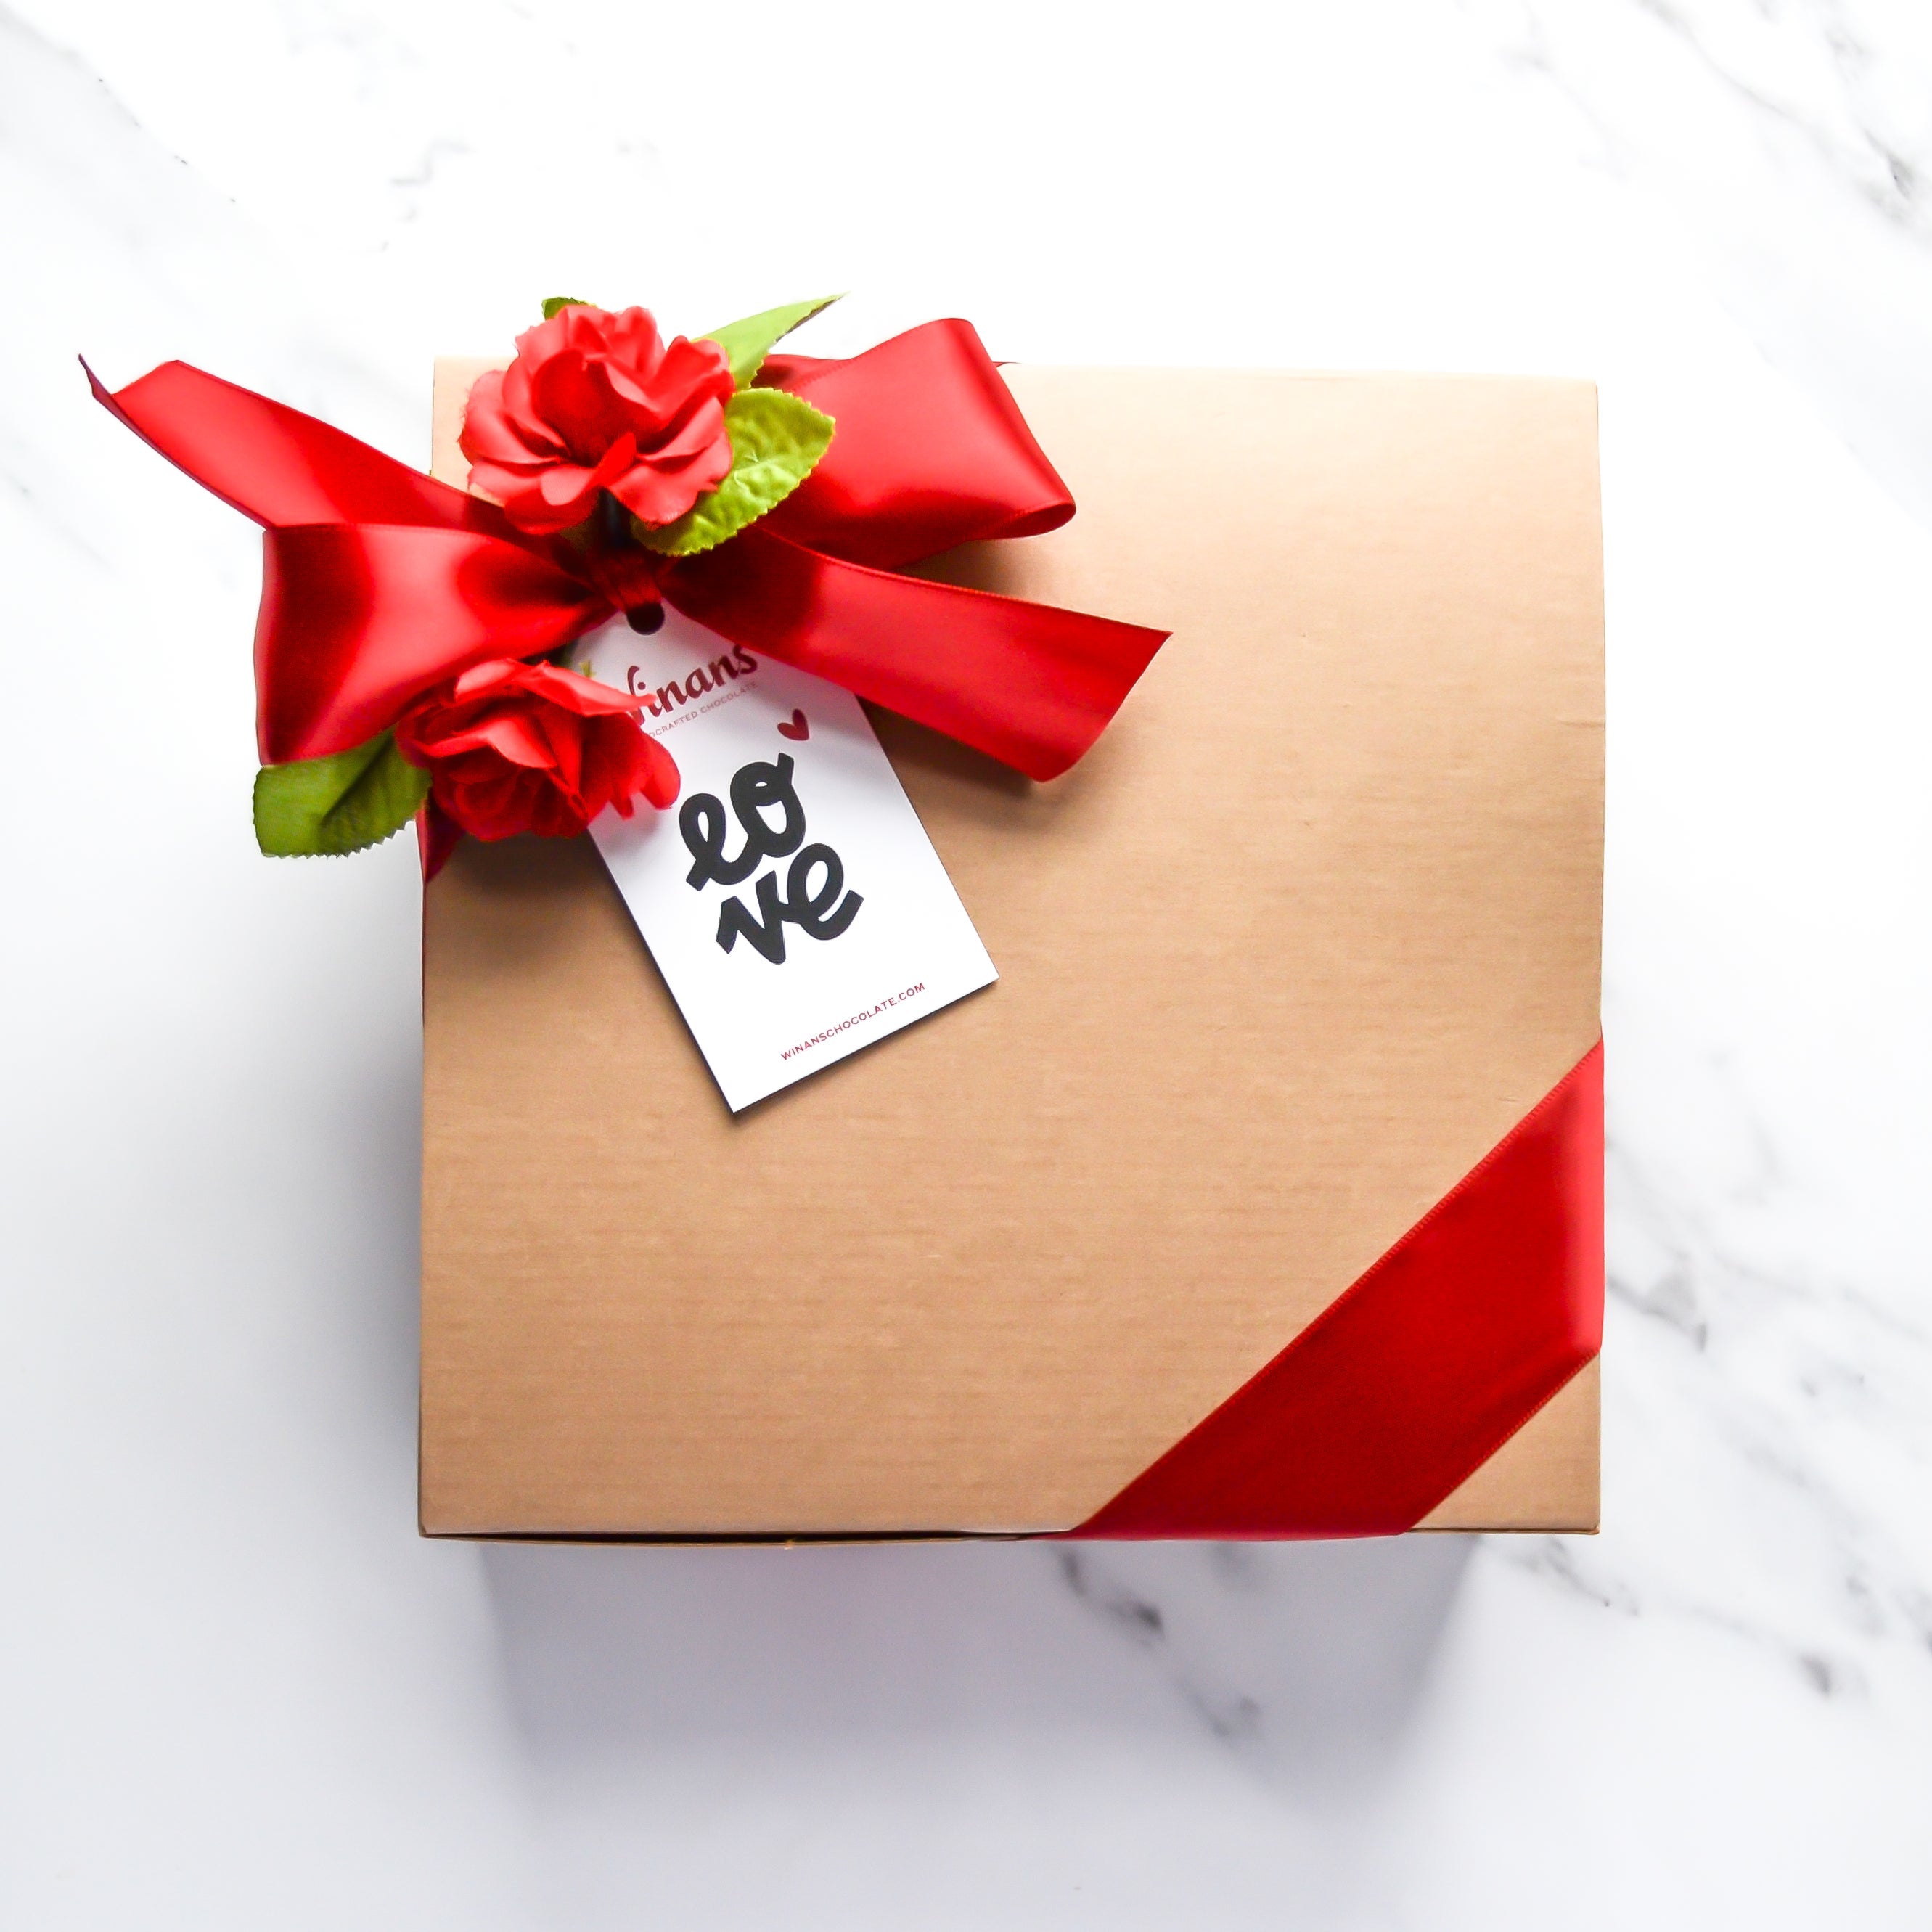 Winans Simply Sweet Gift Box